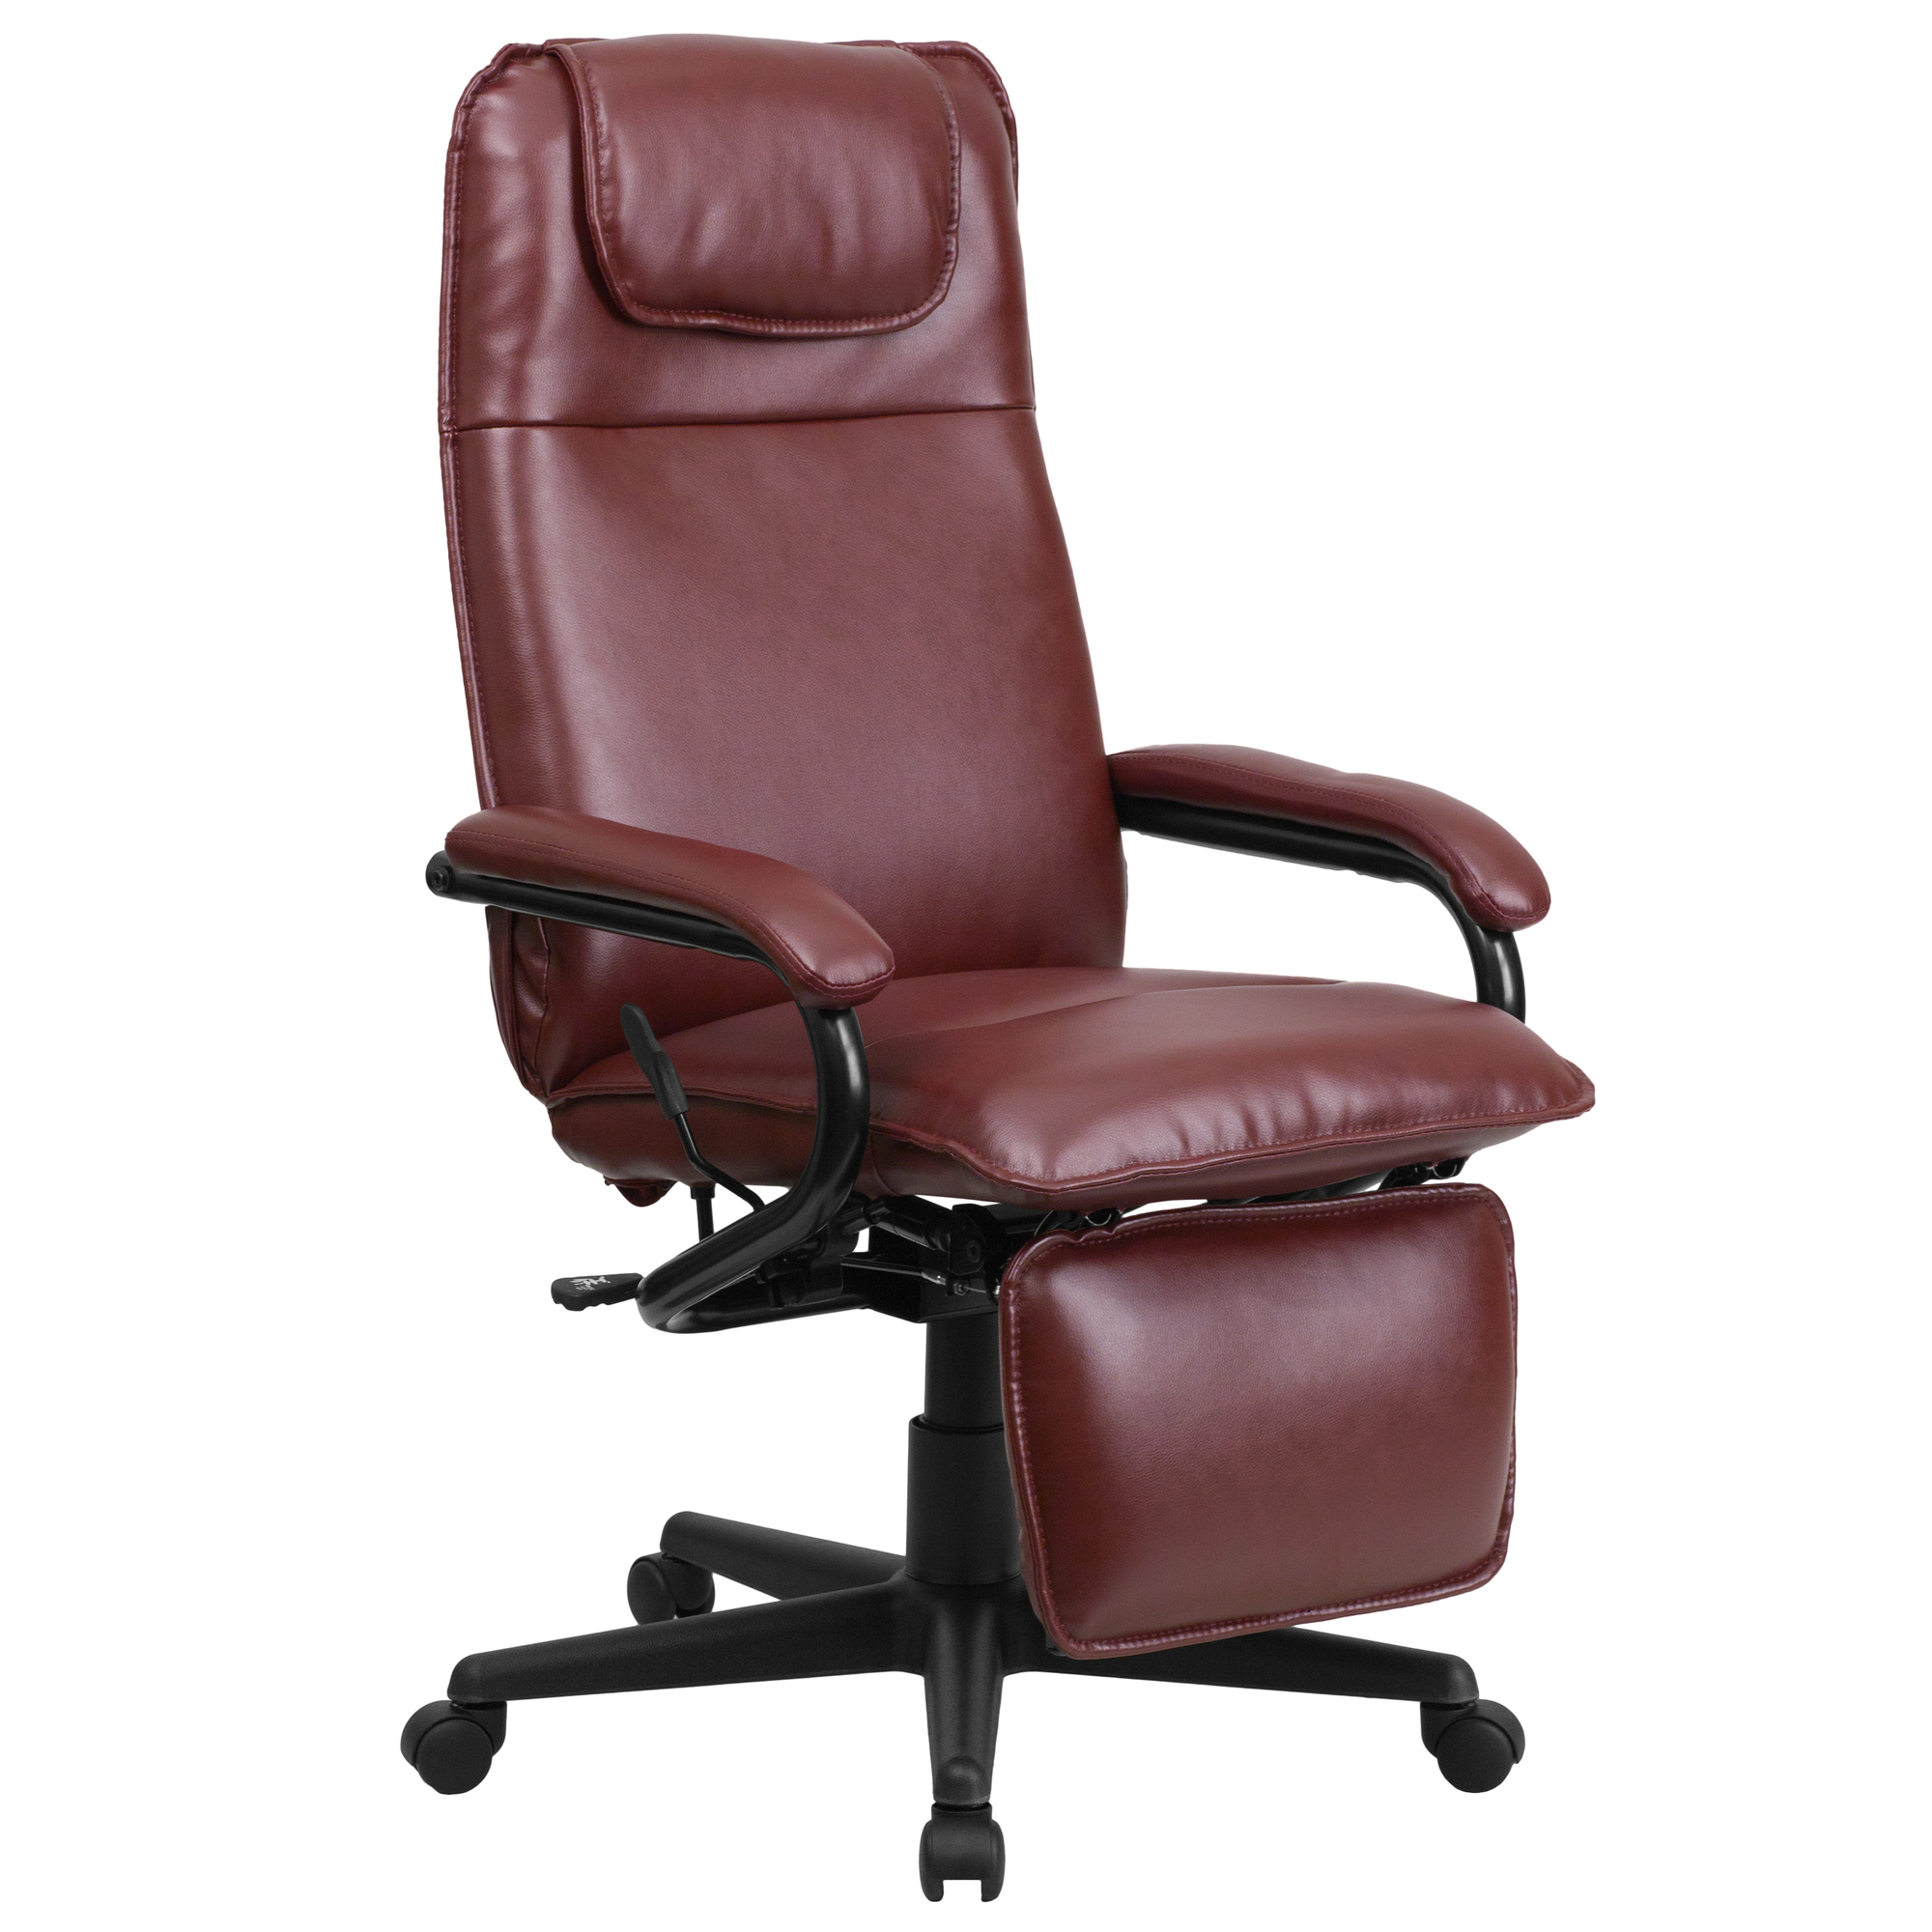 Flash Furniture, High Back Burgundy LeatherSoft Swivel Chair w/Arms, Primary Color Burgundy, Included (qty.) 1, Model BT70172BG -  BT-70172-BG-GG